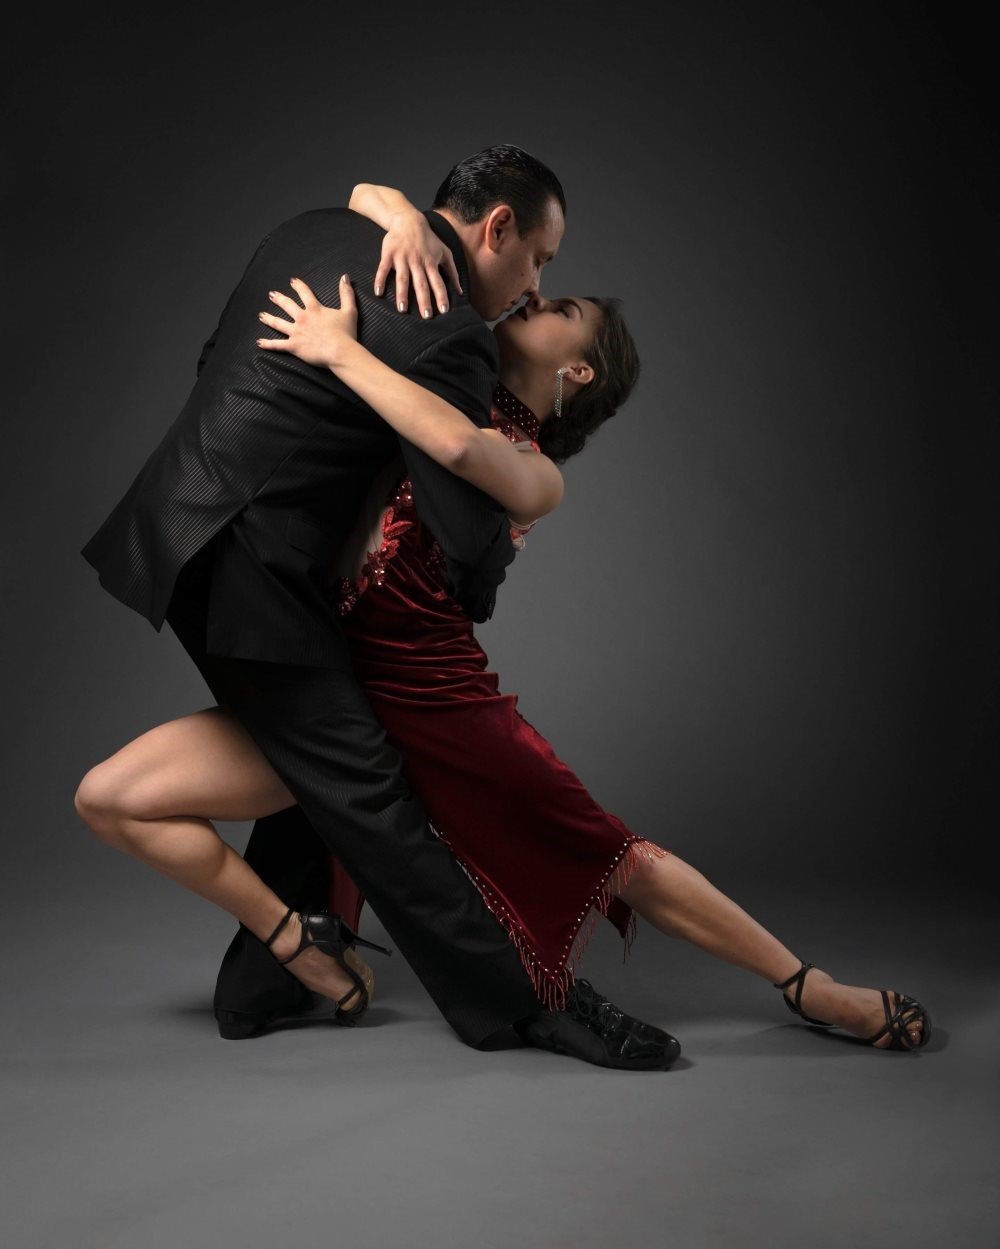 Voxeldance tango. Аргентинское танго милонга. «Tango de pista» (танго для «танцпола»). Аргентинский танцор танго Карлос Гарида. Танец танго милонга.